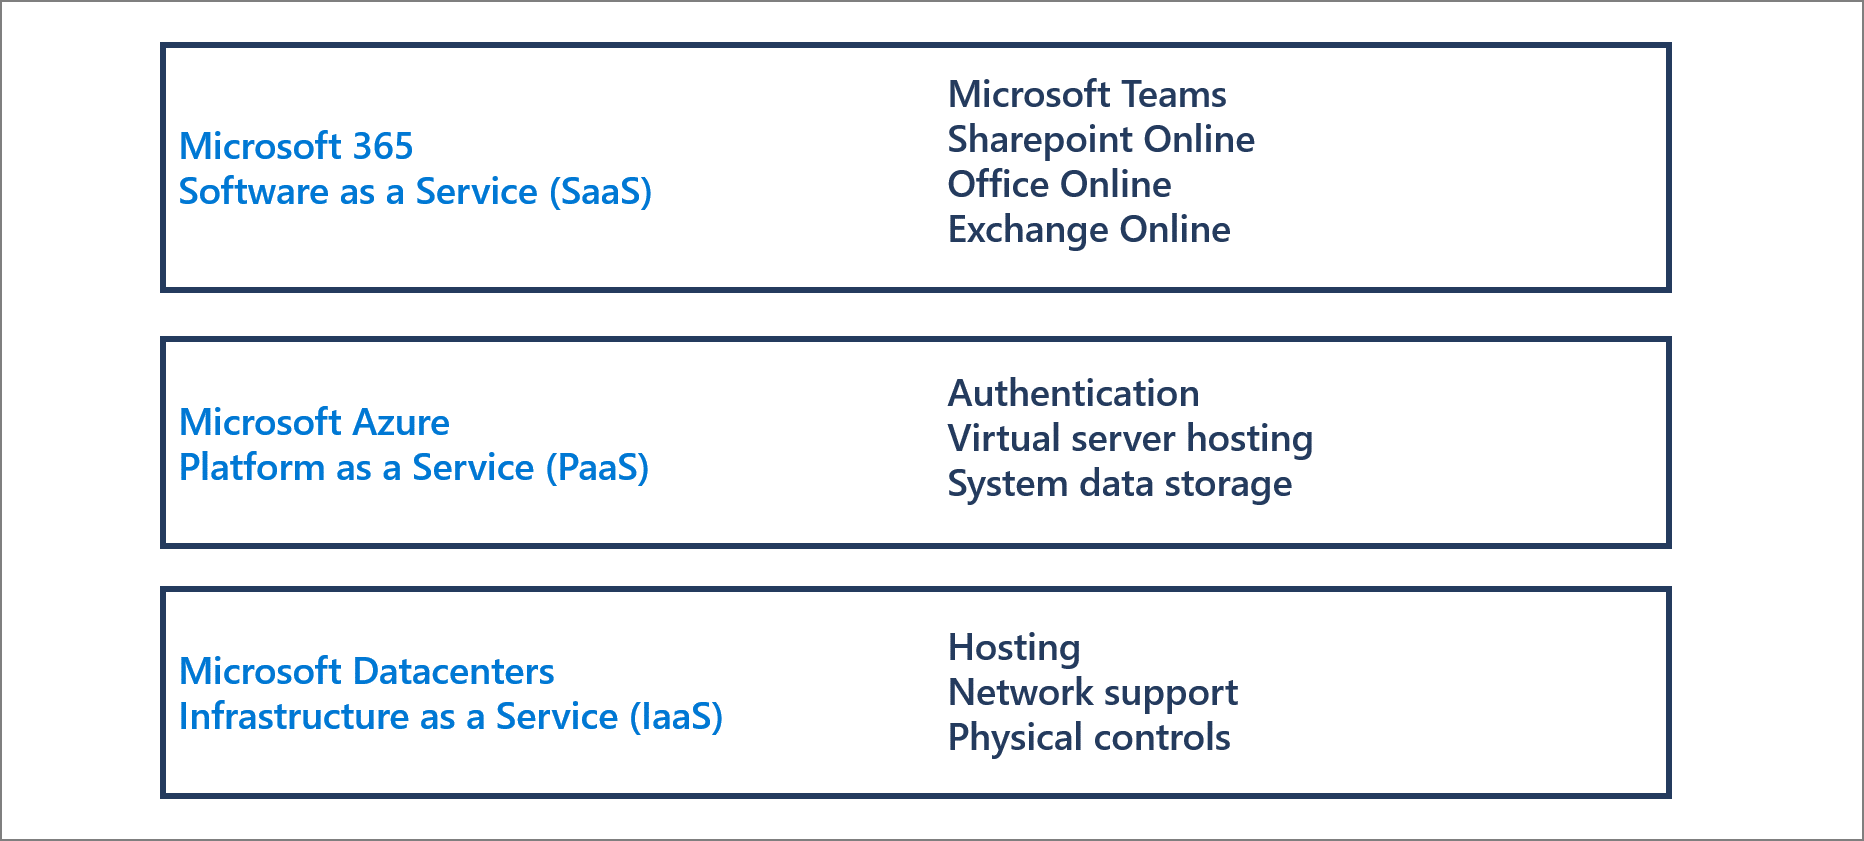 Diagramma che mostra le differenze tra Software as a Service (Saas) di Microsoft 365, Platform as a Service (PaaS) di Microsoft Azure e Infrastructure as a Service (IaaS) dei data center Microsoft.